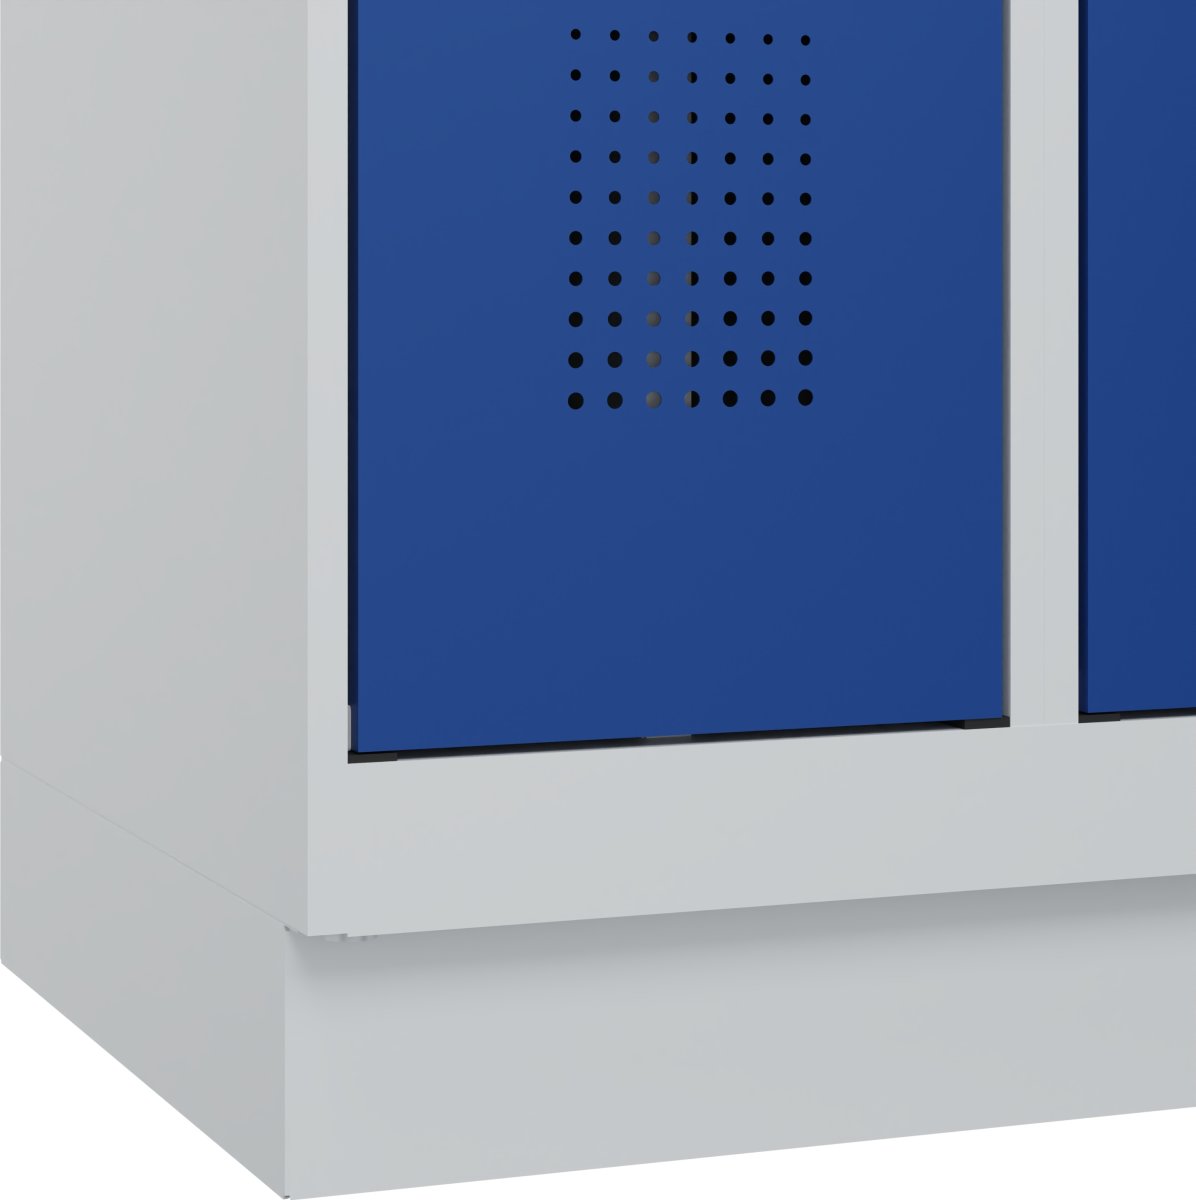 CP garderobeskab,2x4rum,Sokkel,Cylinderlås,Grå/Blå